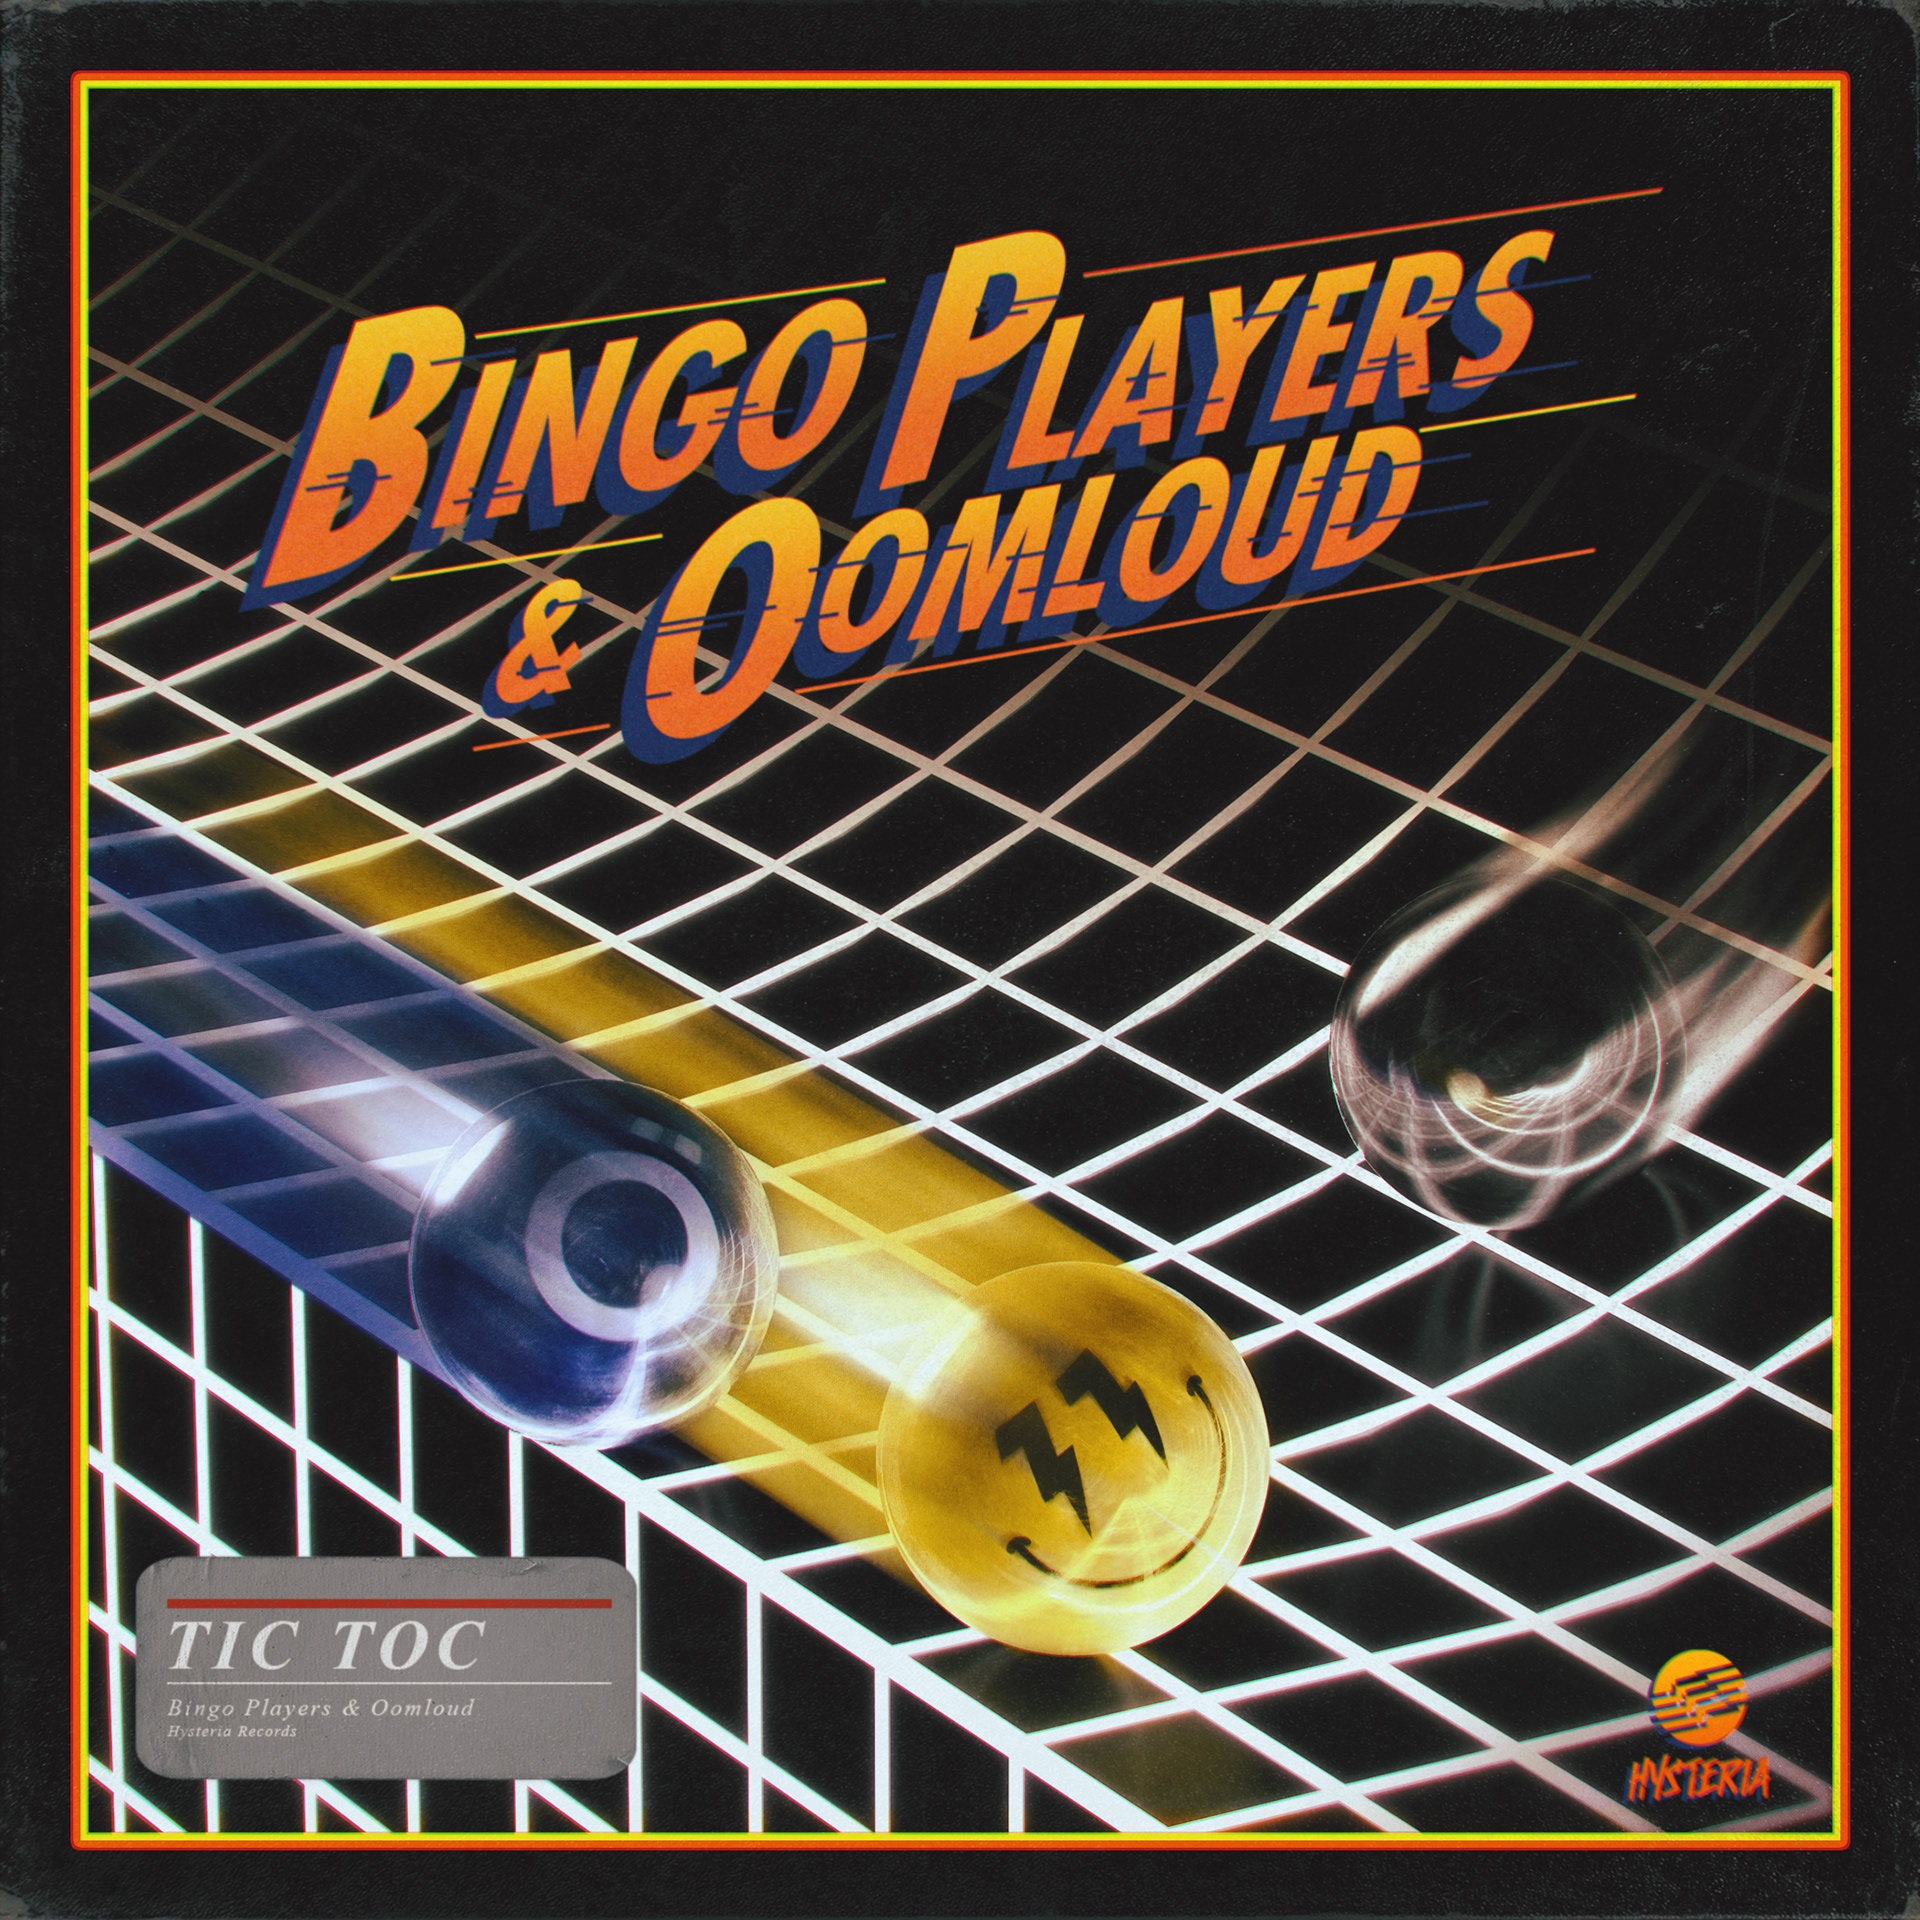 Bingo players. Bingo Players синглы. Bingo Players & Oomloud - get Low. Bingo Players & Oomloud get together.